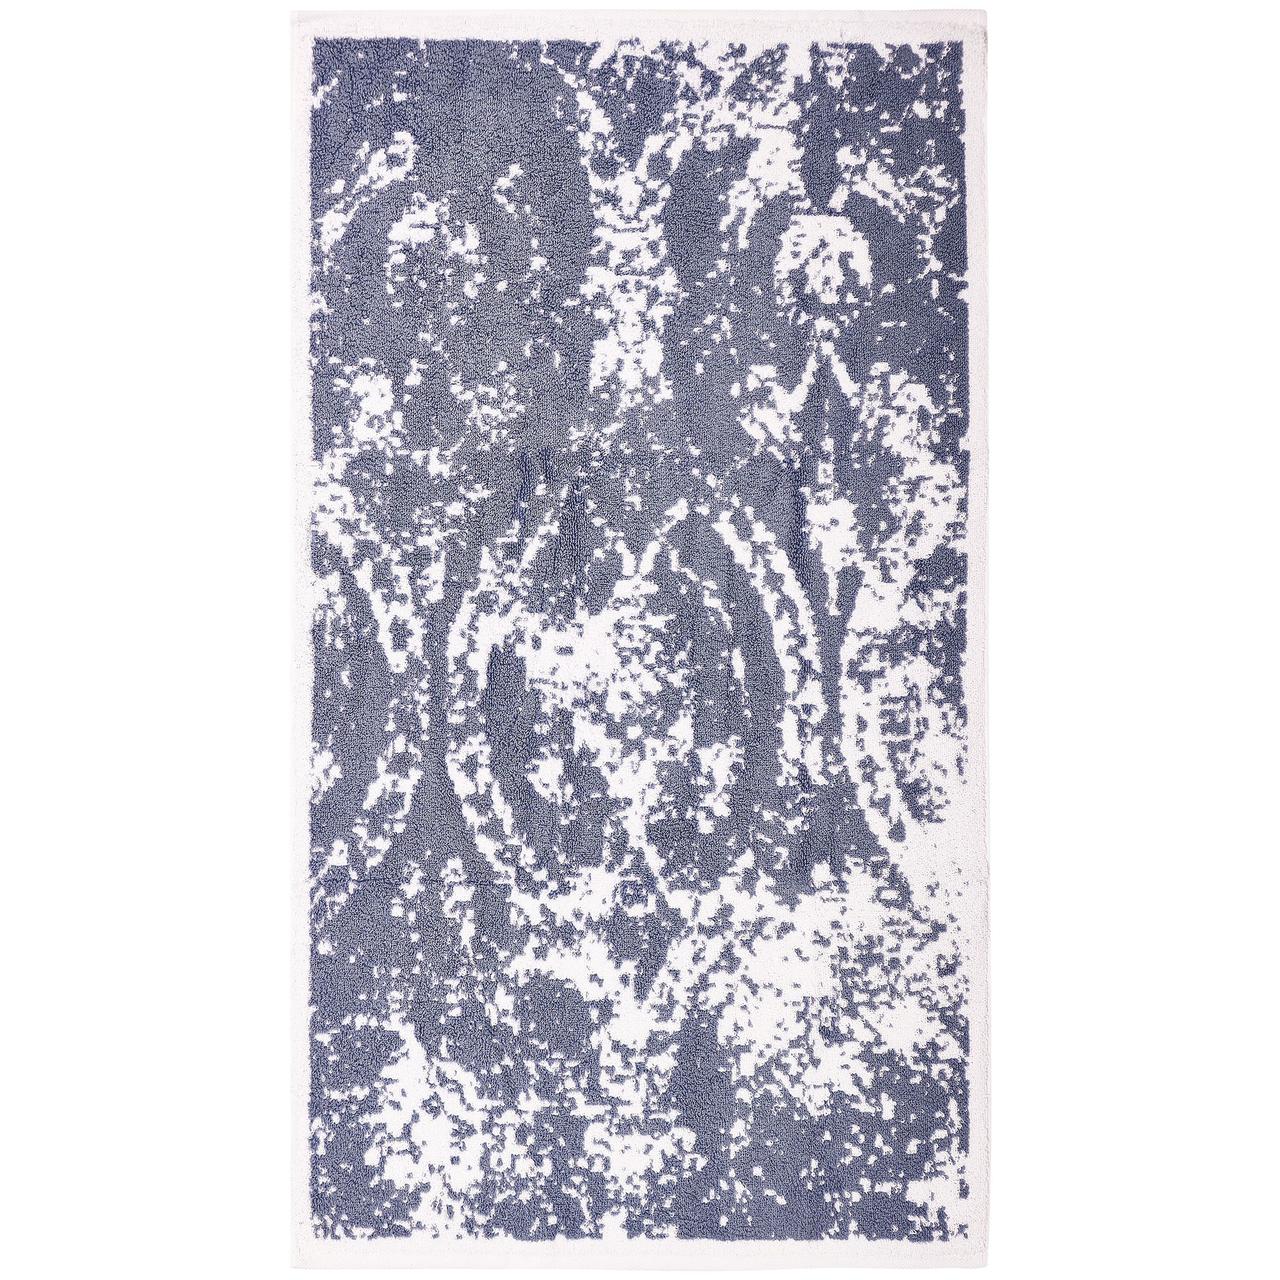 Полотенце махровое Vintage Medium, серо-голубое (артикул 15709.13), фото 1